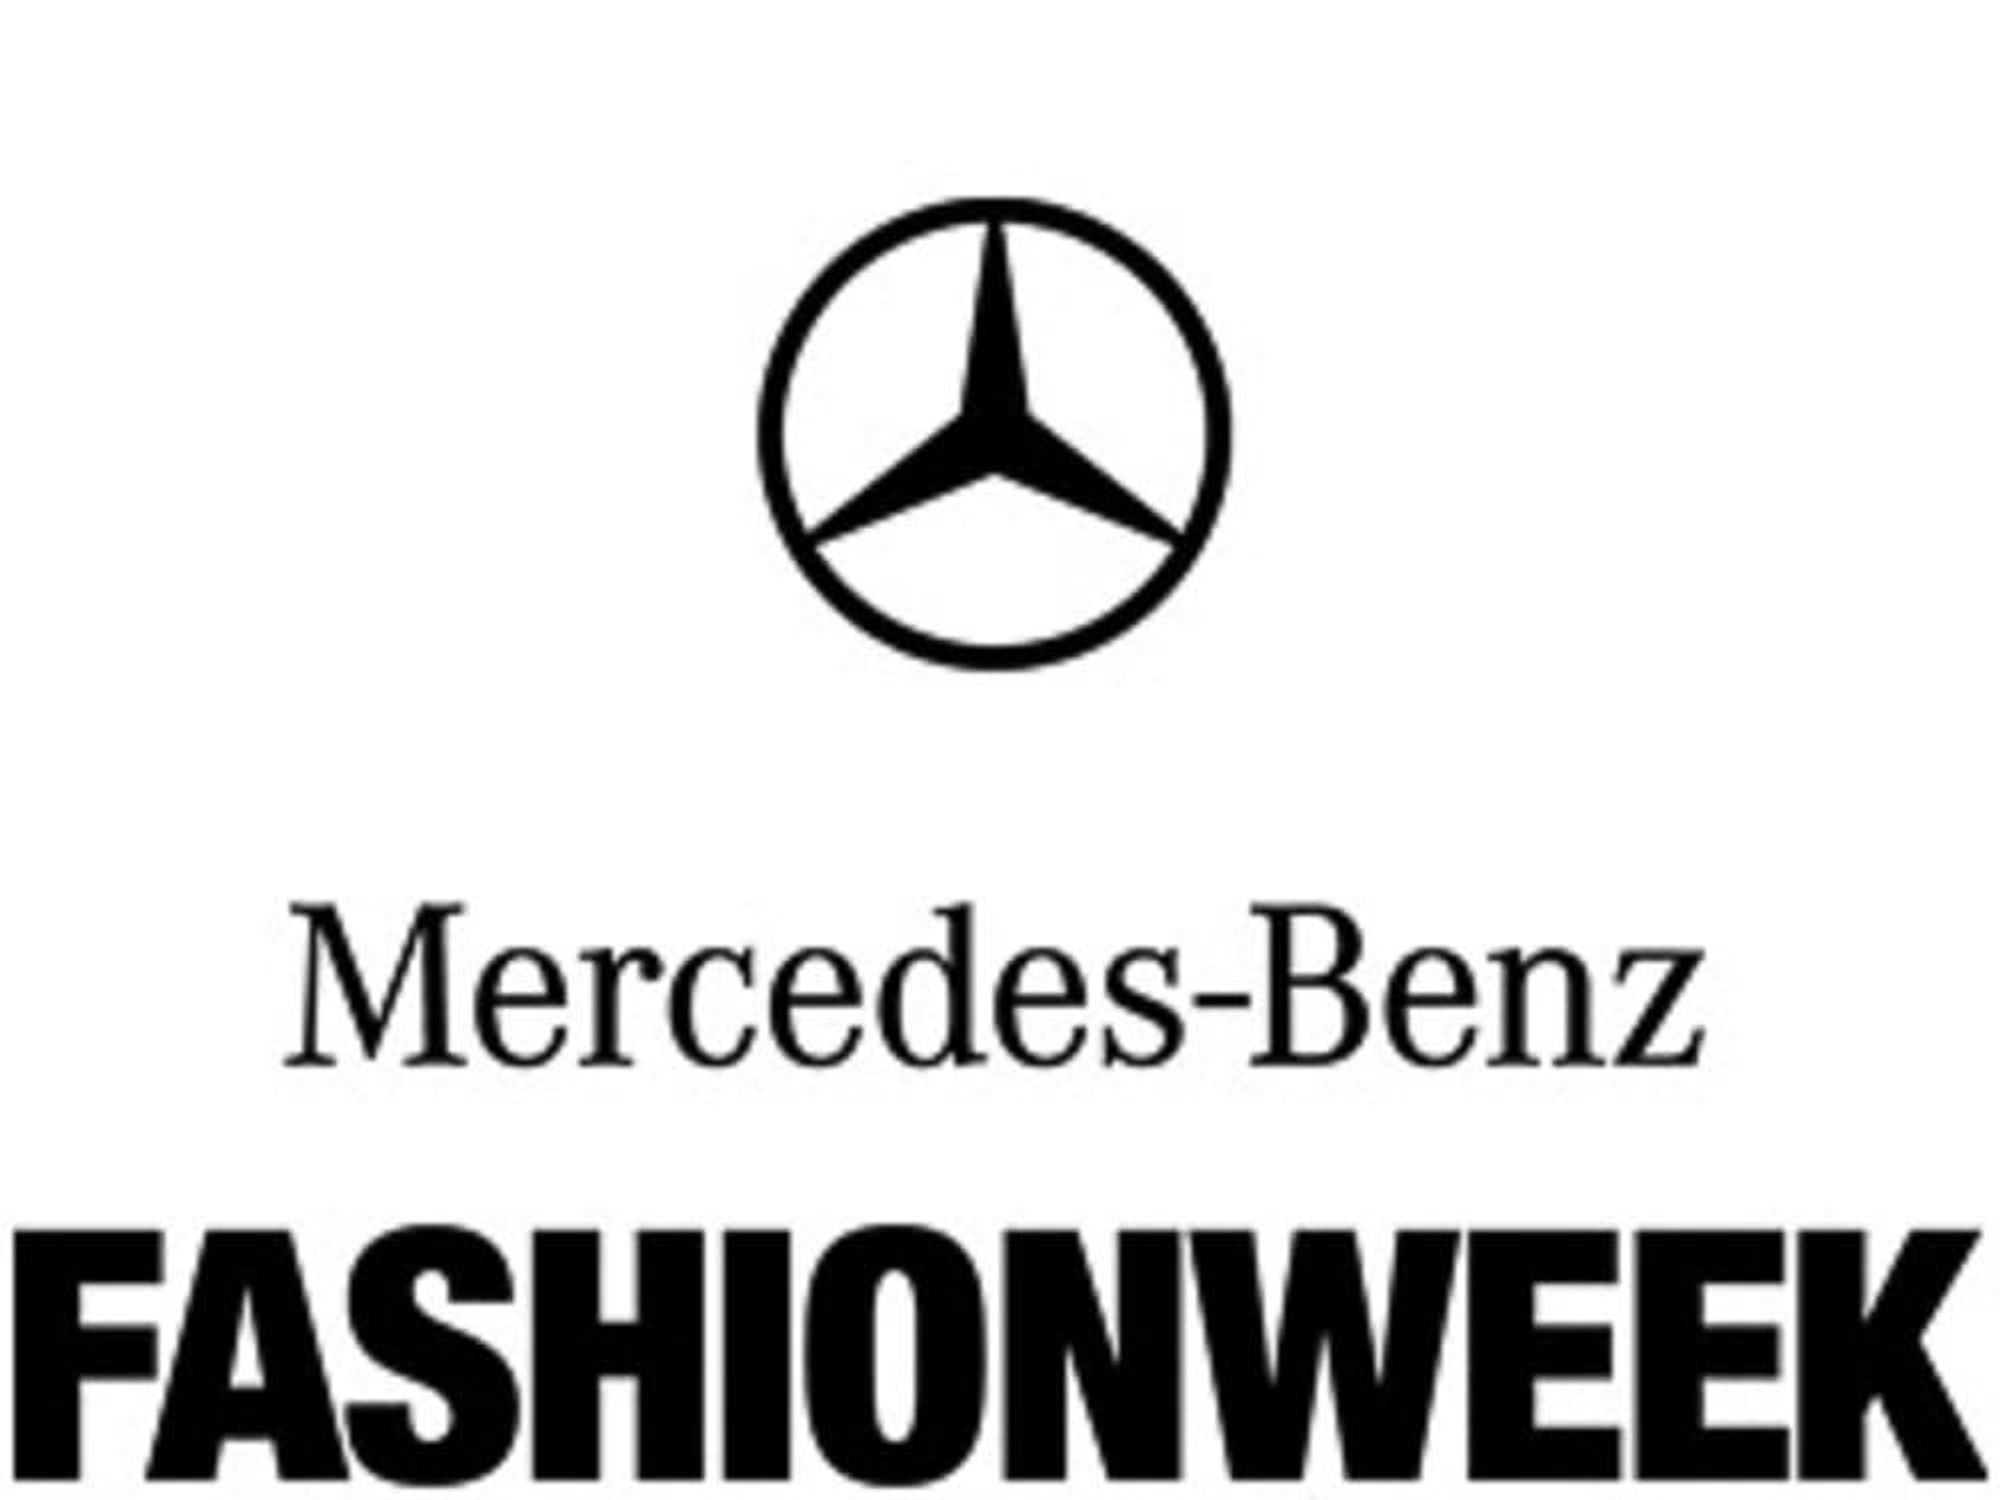 News_FashionWeek_logo